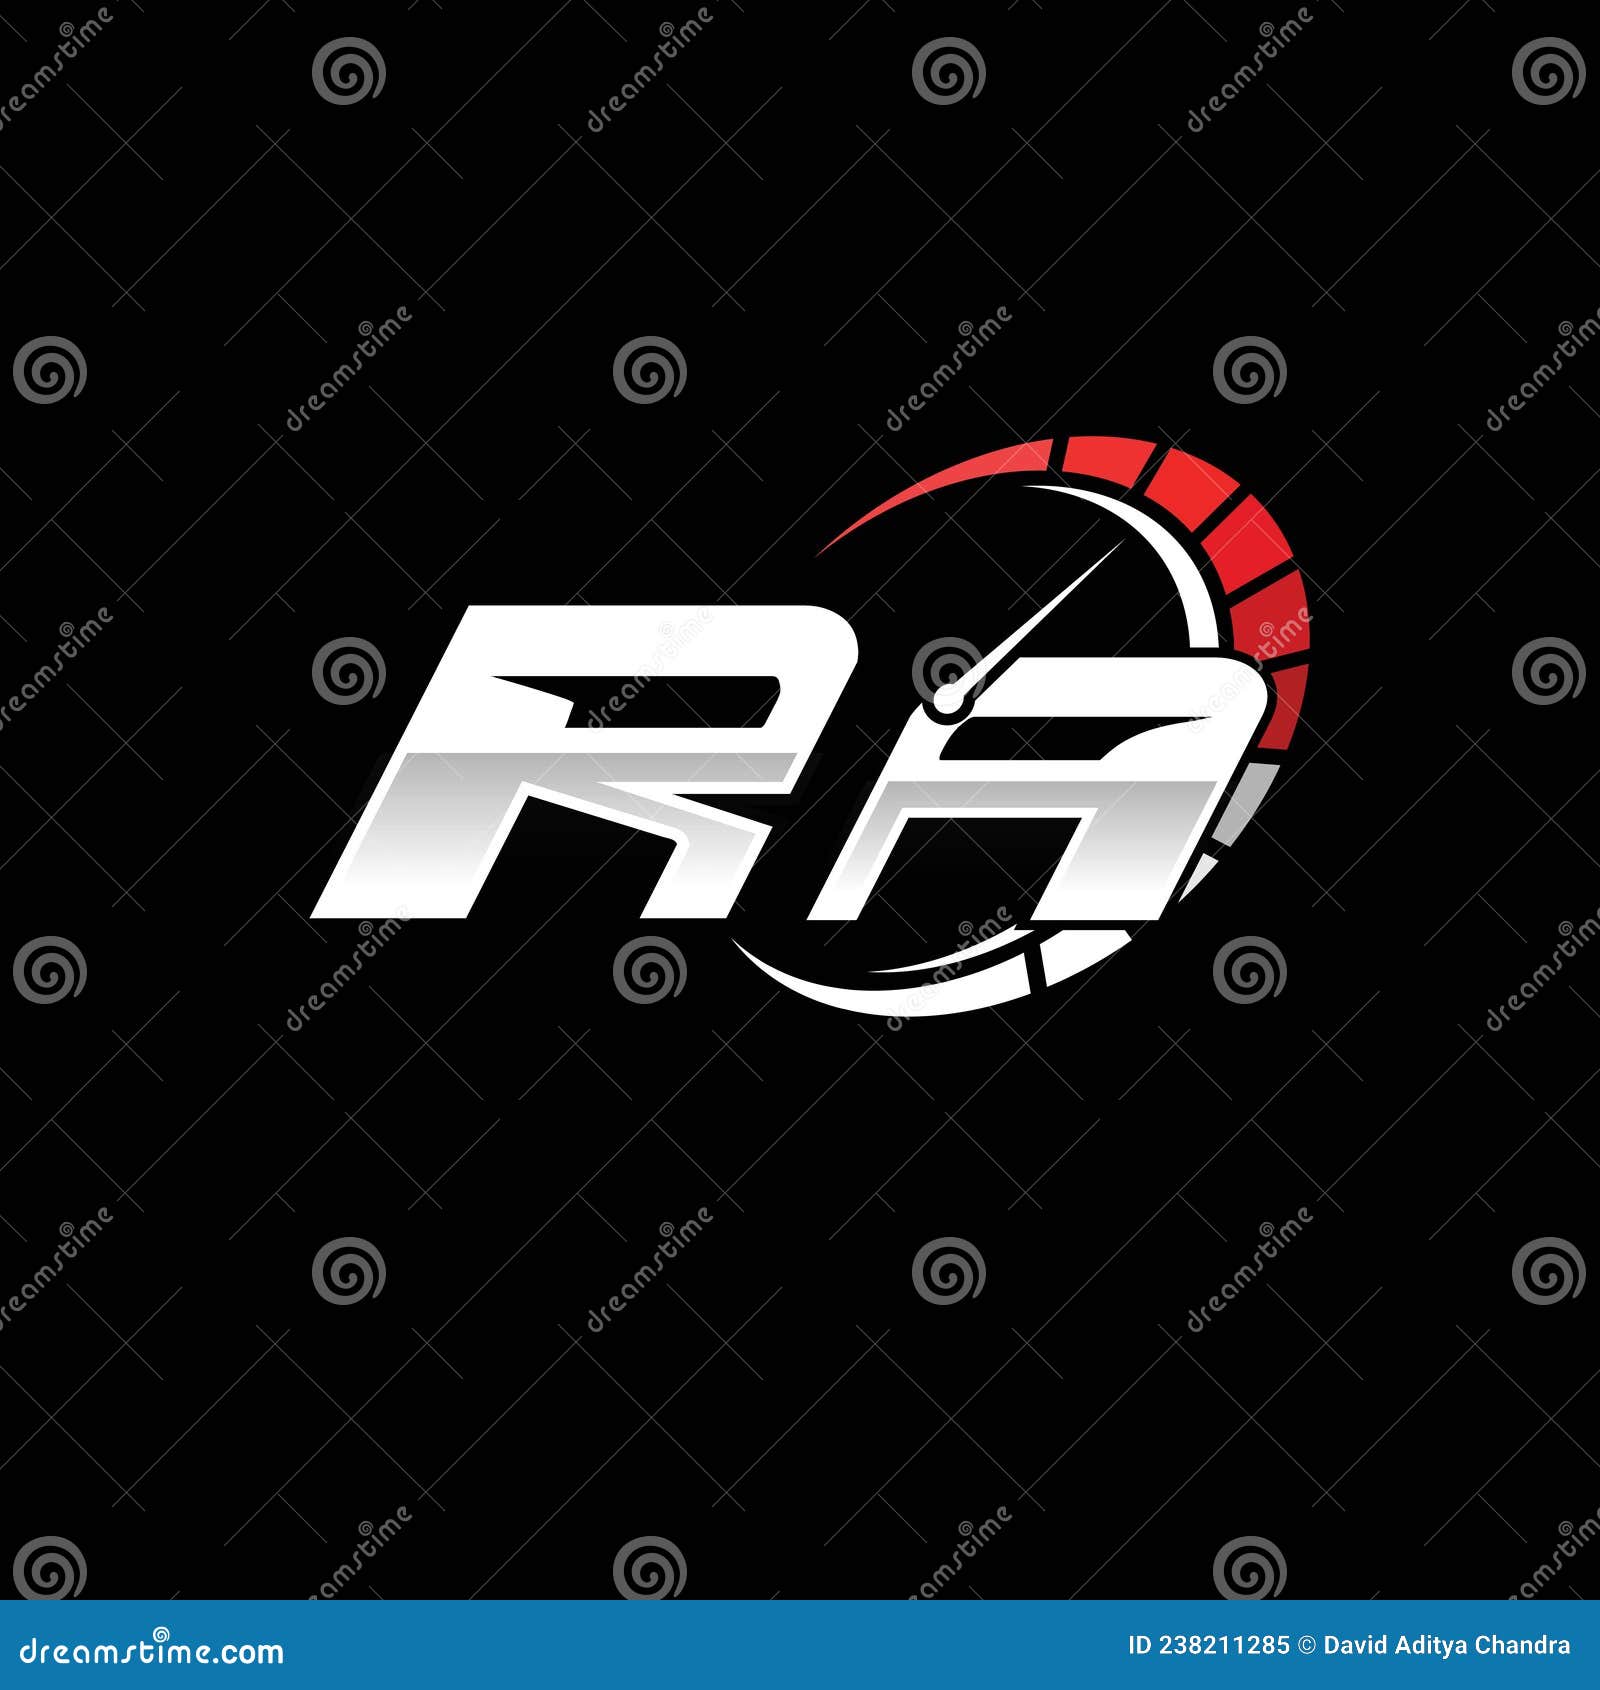 ra logo letter speed meter racing style